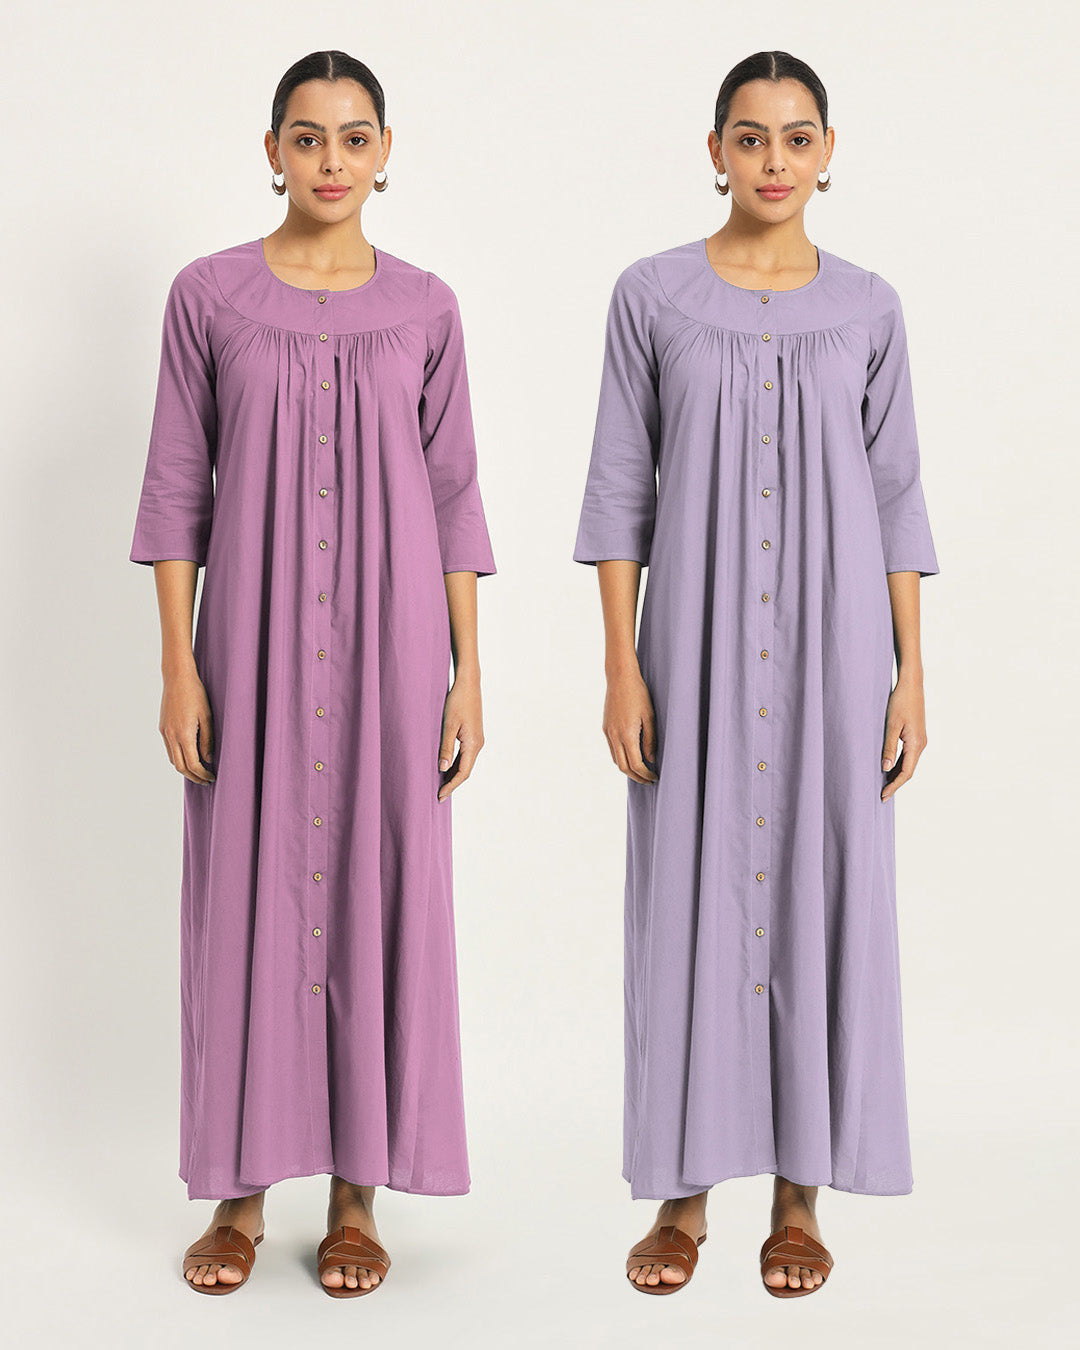 Combo: Iris Pink & Lilac Nighttime Must-Have Nightdress